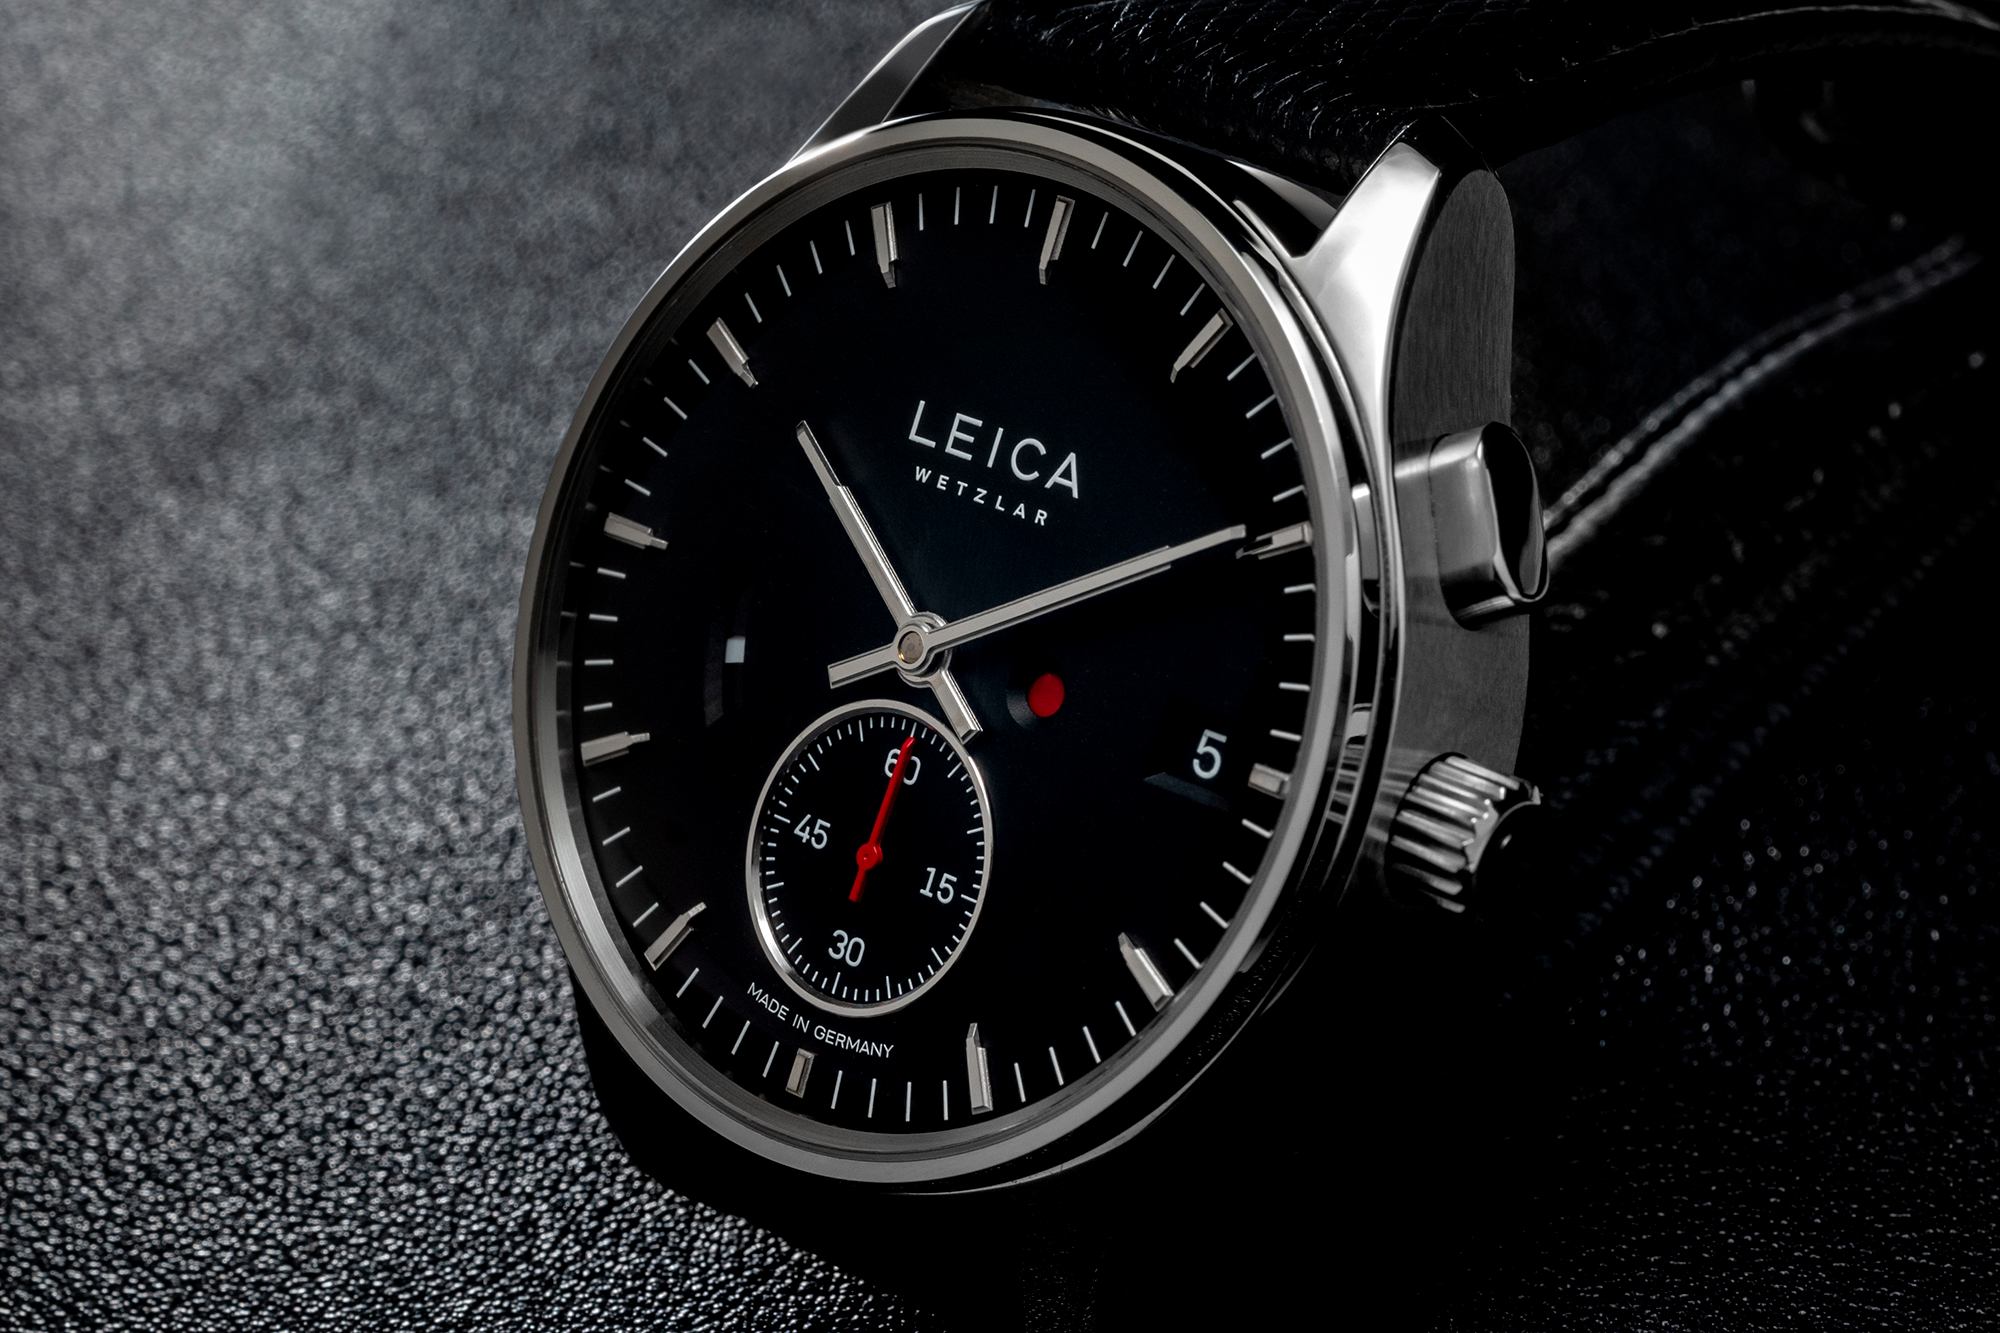 Leica L1 watch